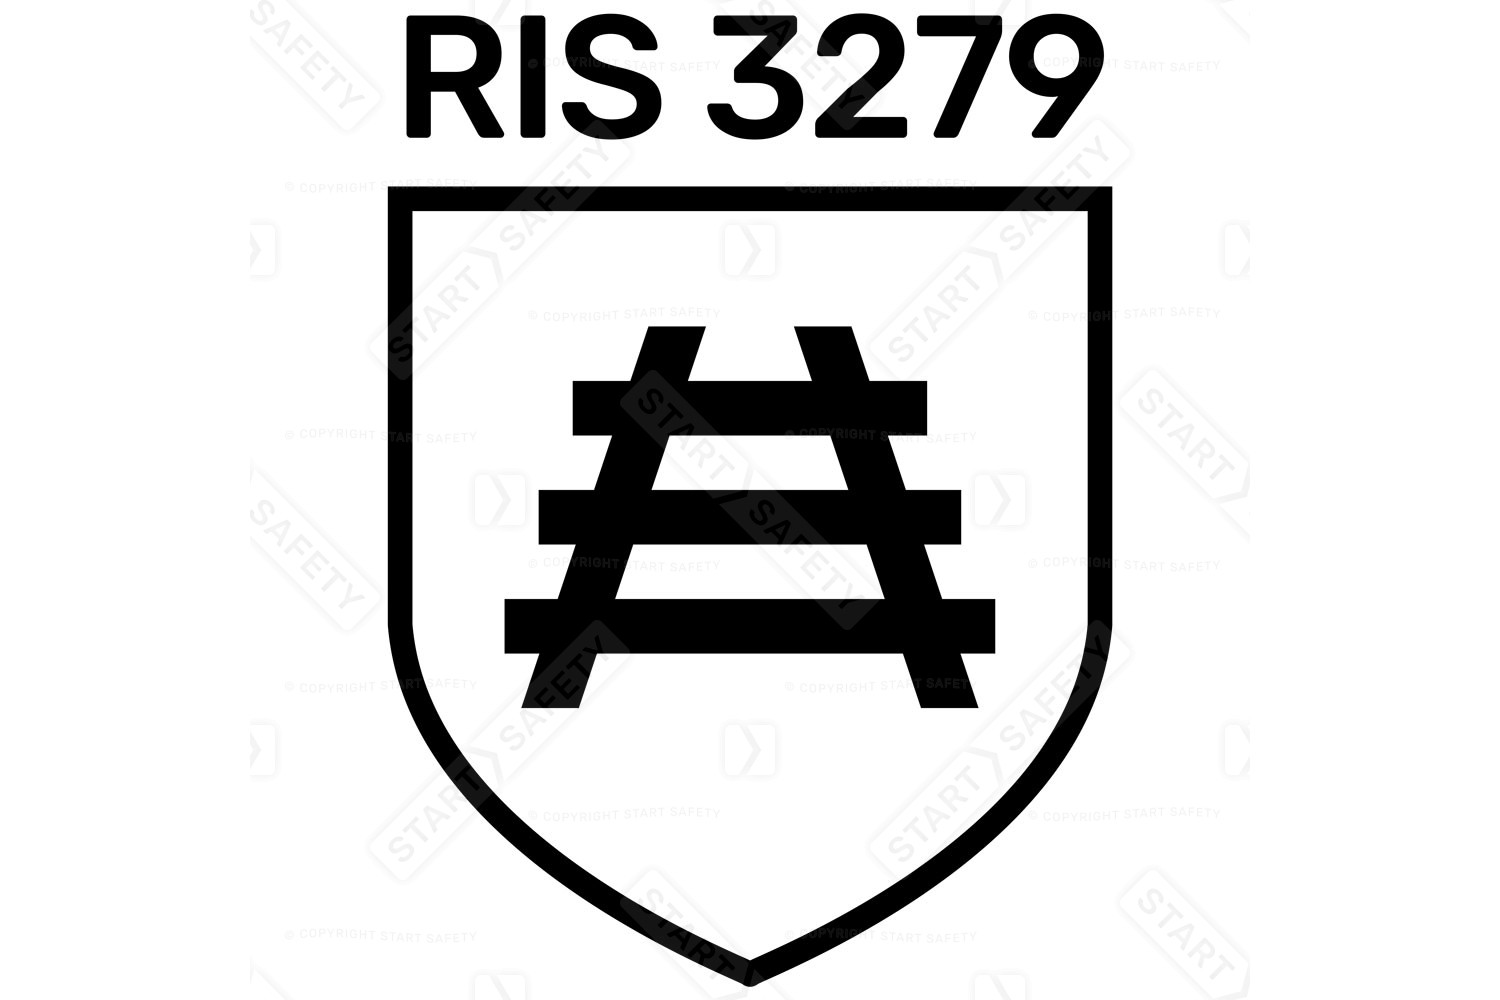 RIS 3279 Railway Working Standard Symbol